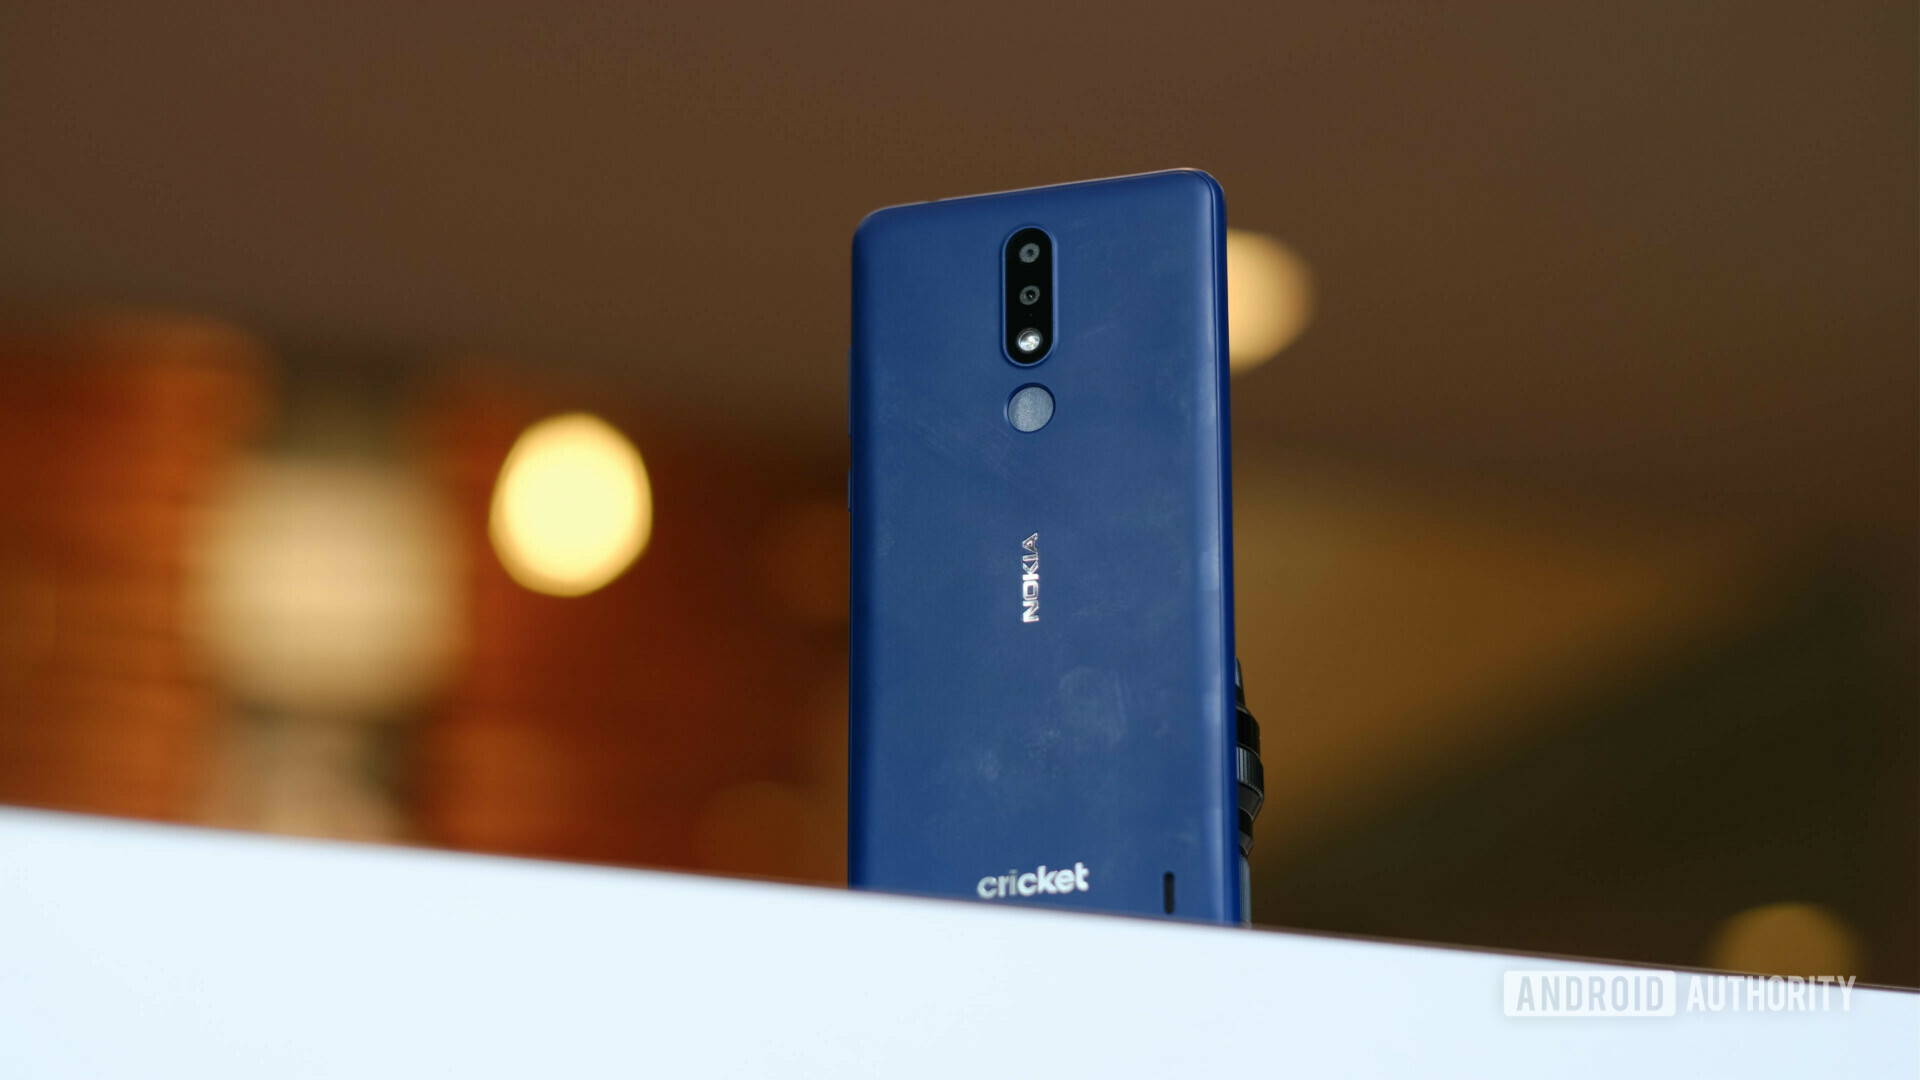 Nokia in 2019 